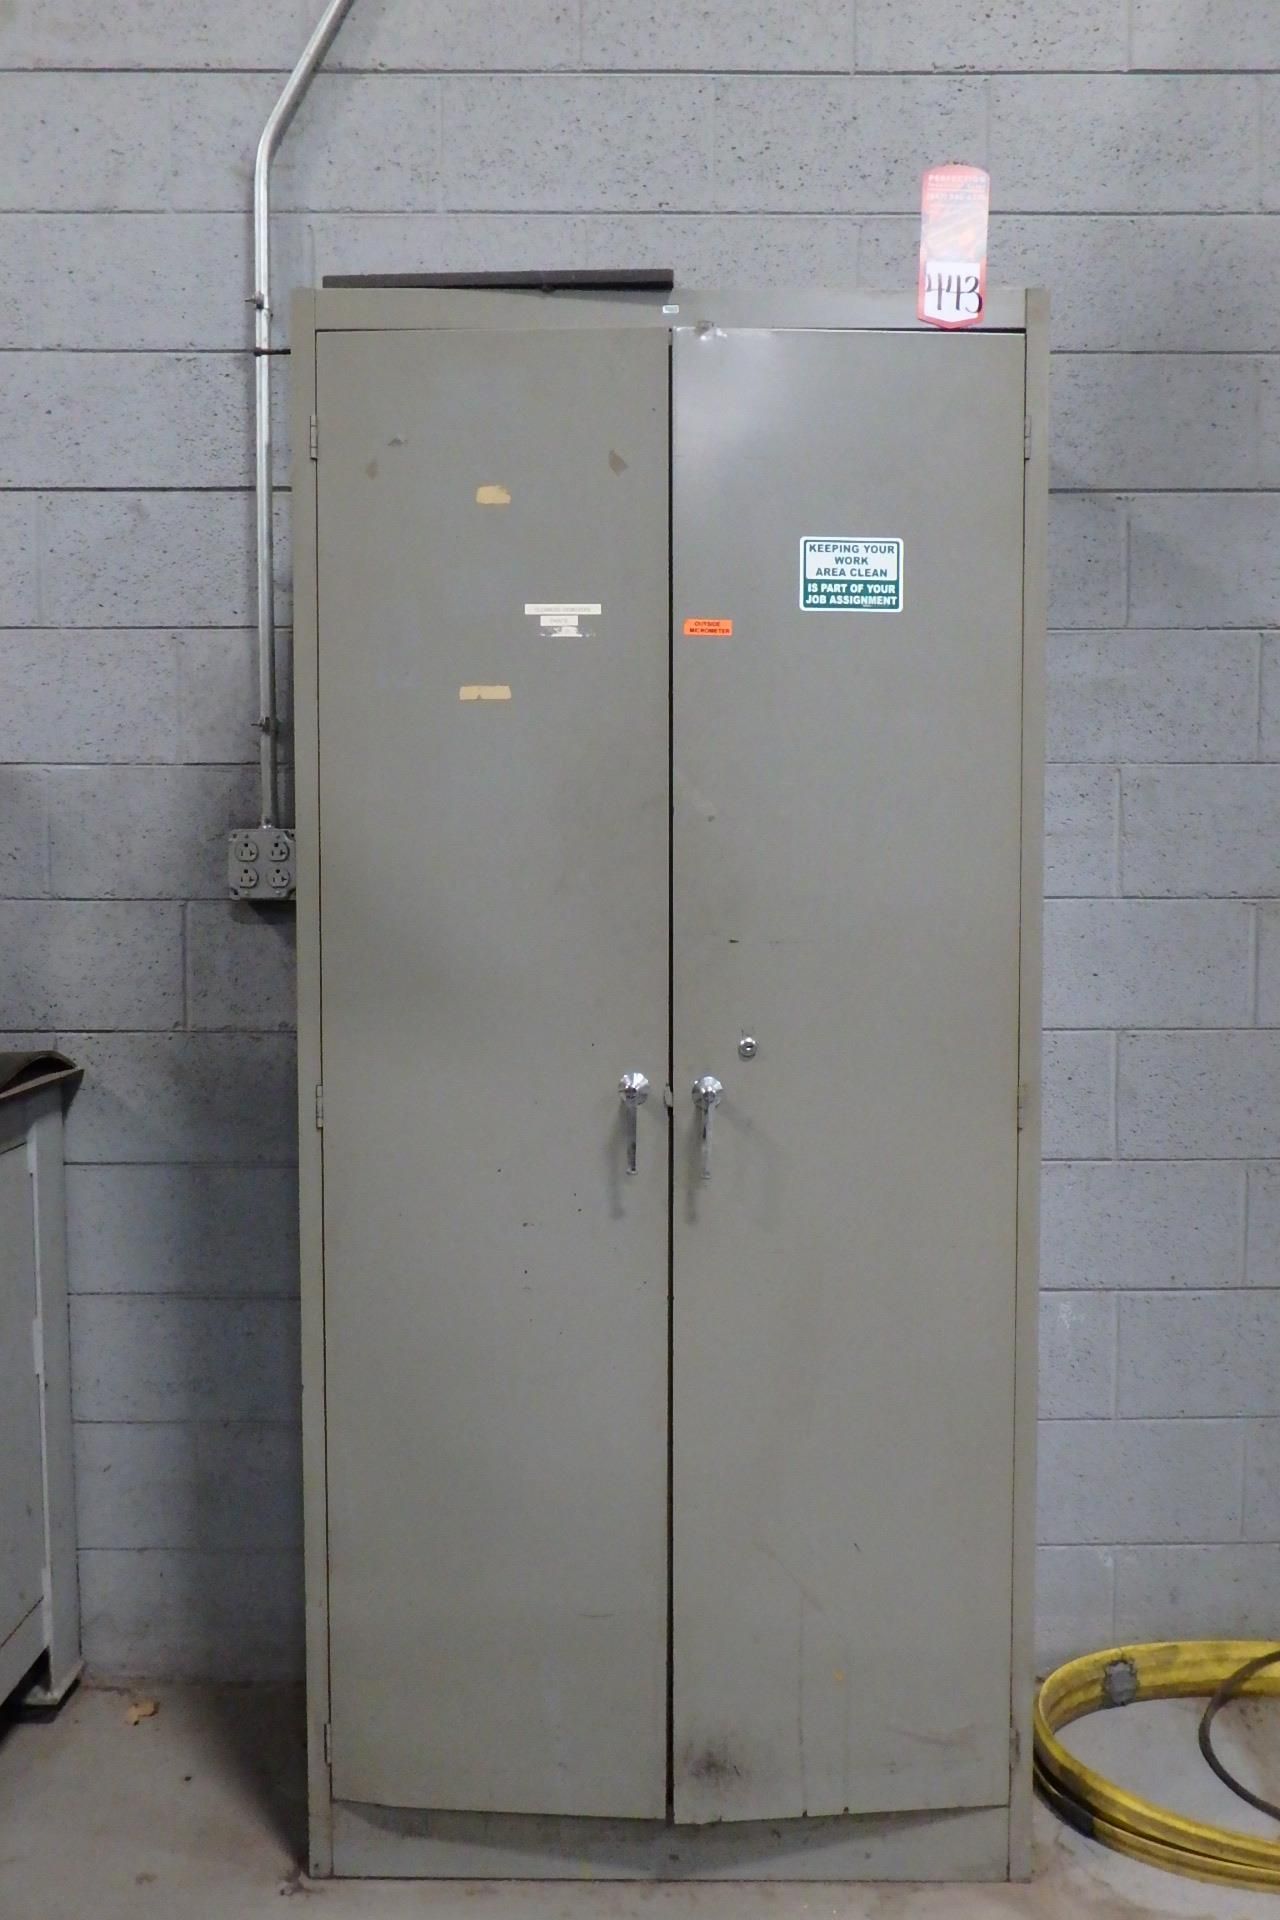 Lot Comprising (4) 2-Door Metal Storage Cabinets, (No Contents) - Image 4 of 4